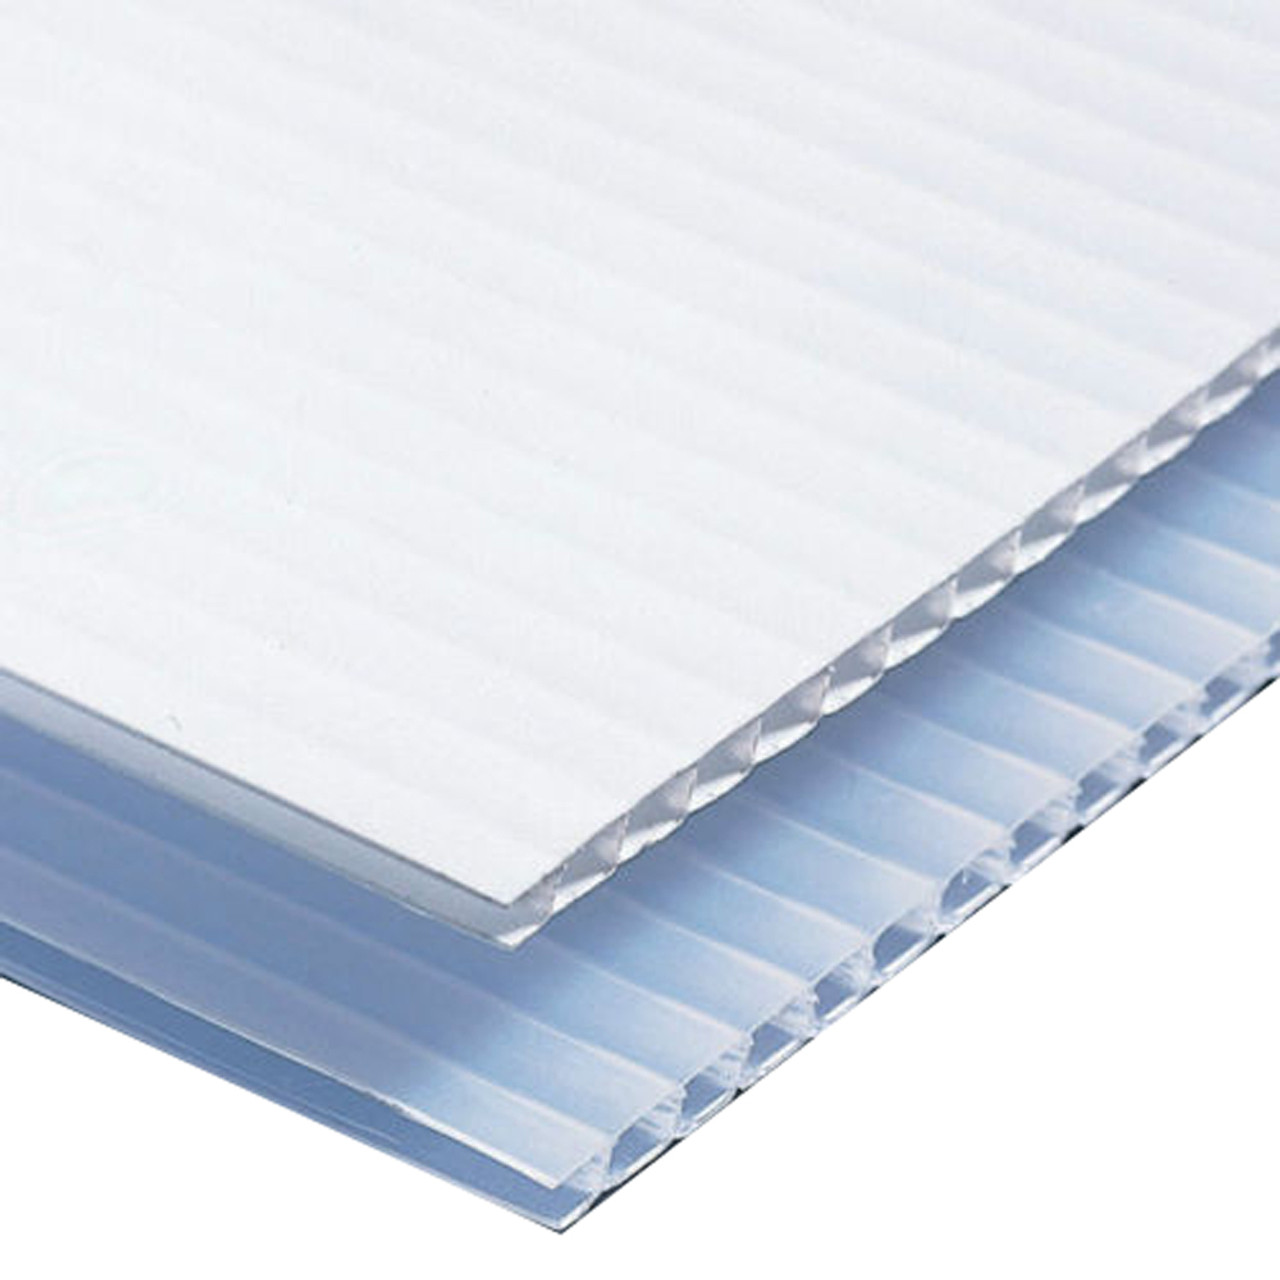 Plastic Sheet: Polypropylene, 1/2 Thick, 12 Long, Translucent White